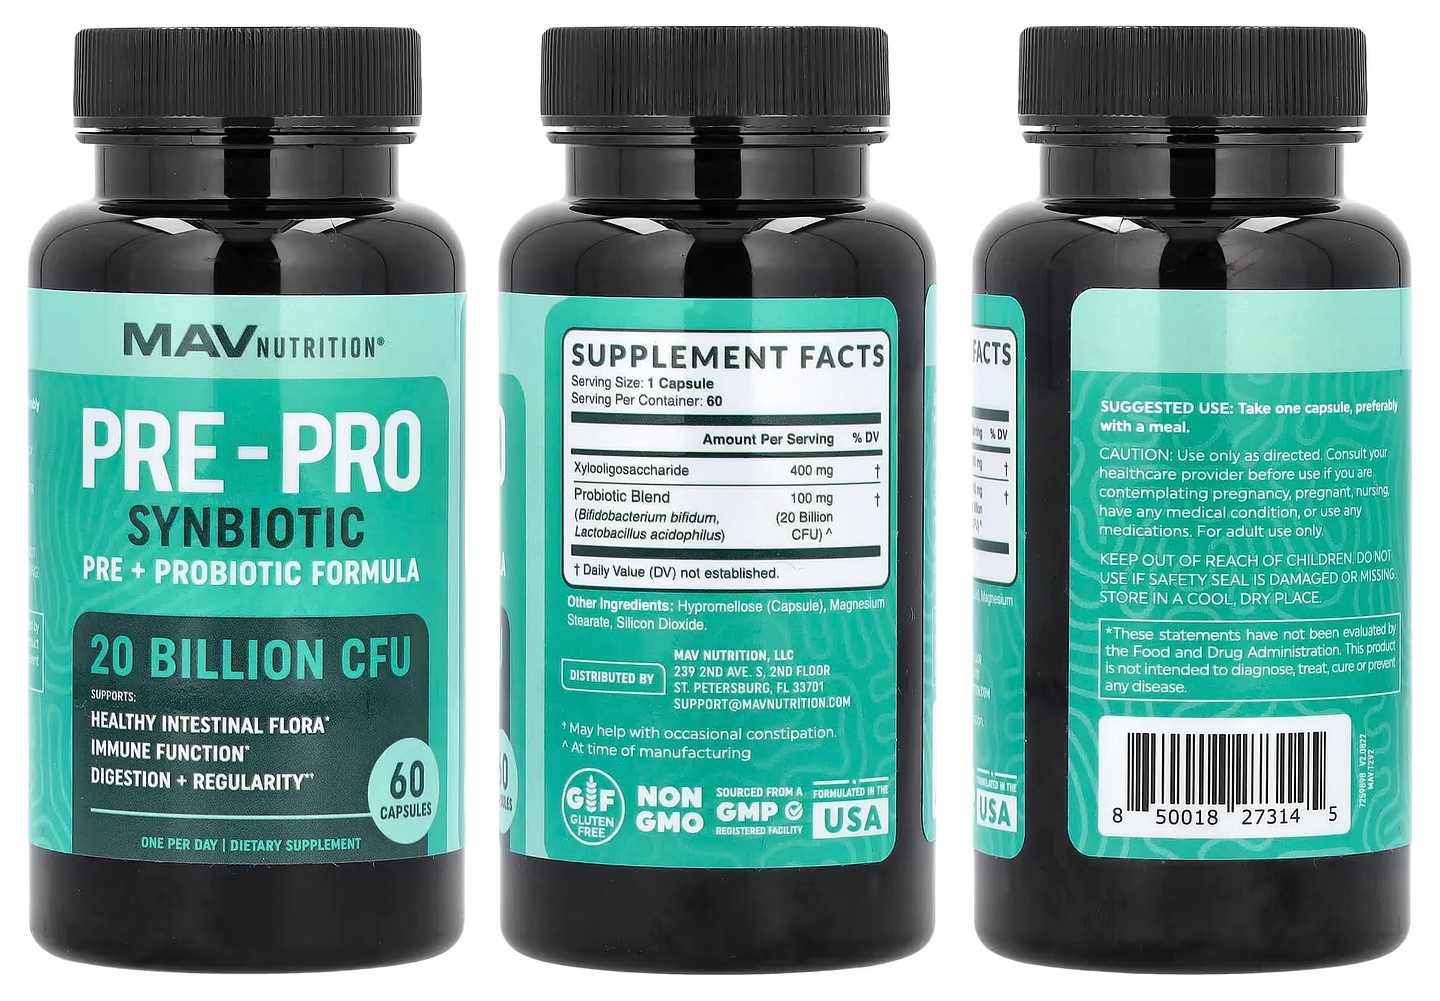 MAV Nutrition, Pre-Pro Synbiotic, Pre + Probiotic Formula, 20 Billion CFU packaging